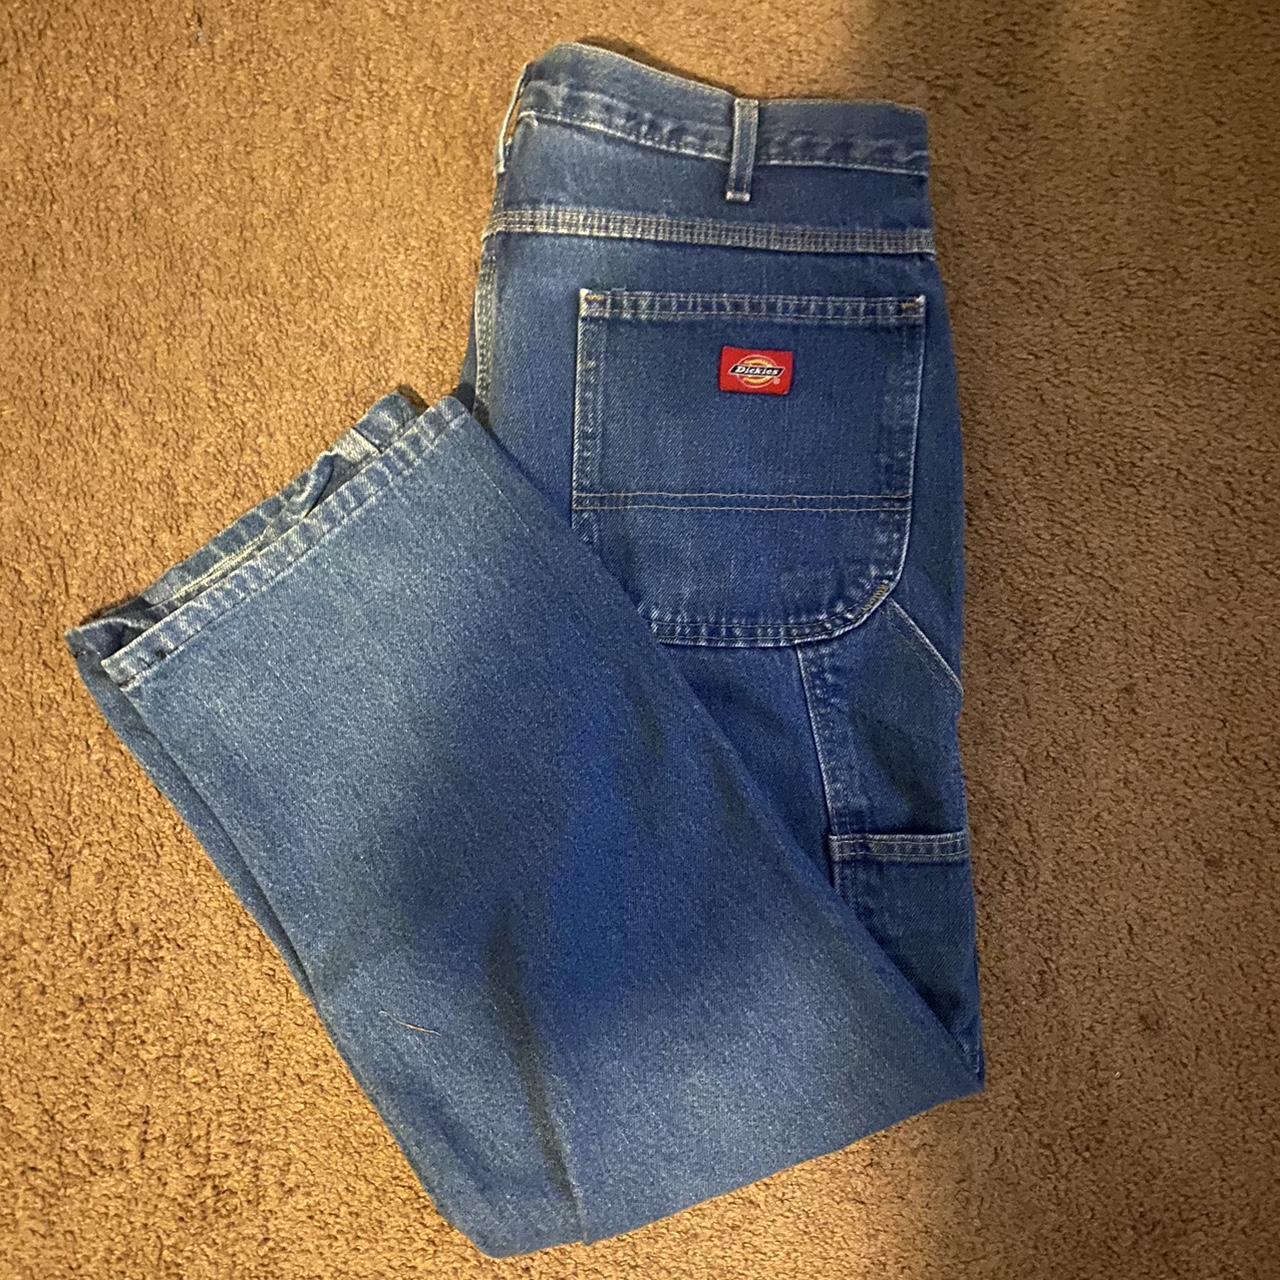 Vintage Dickies Carpenter Jeans Size 34x28 Condition... - Depop